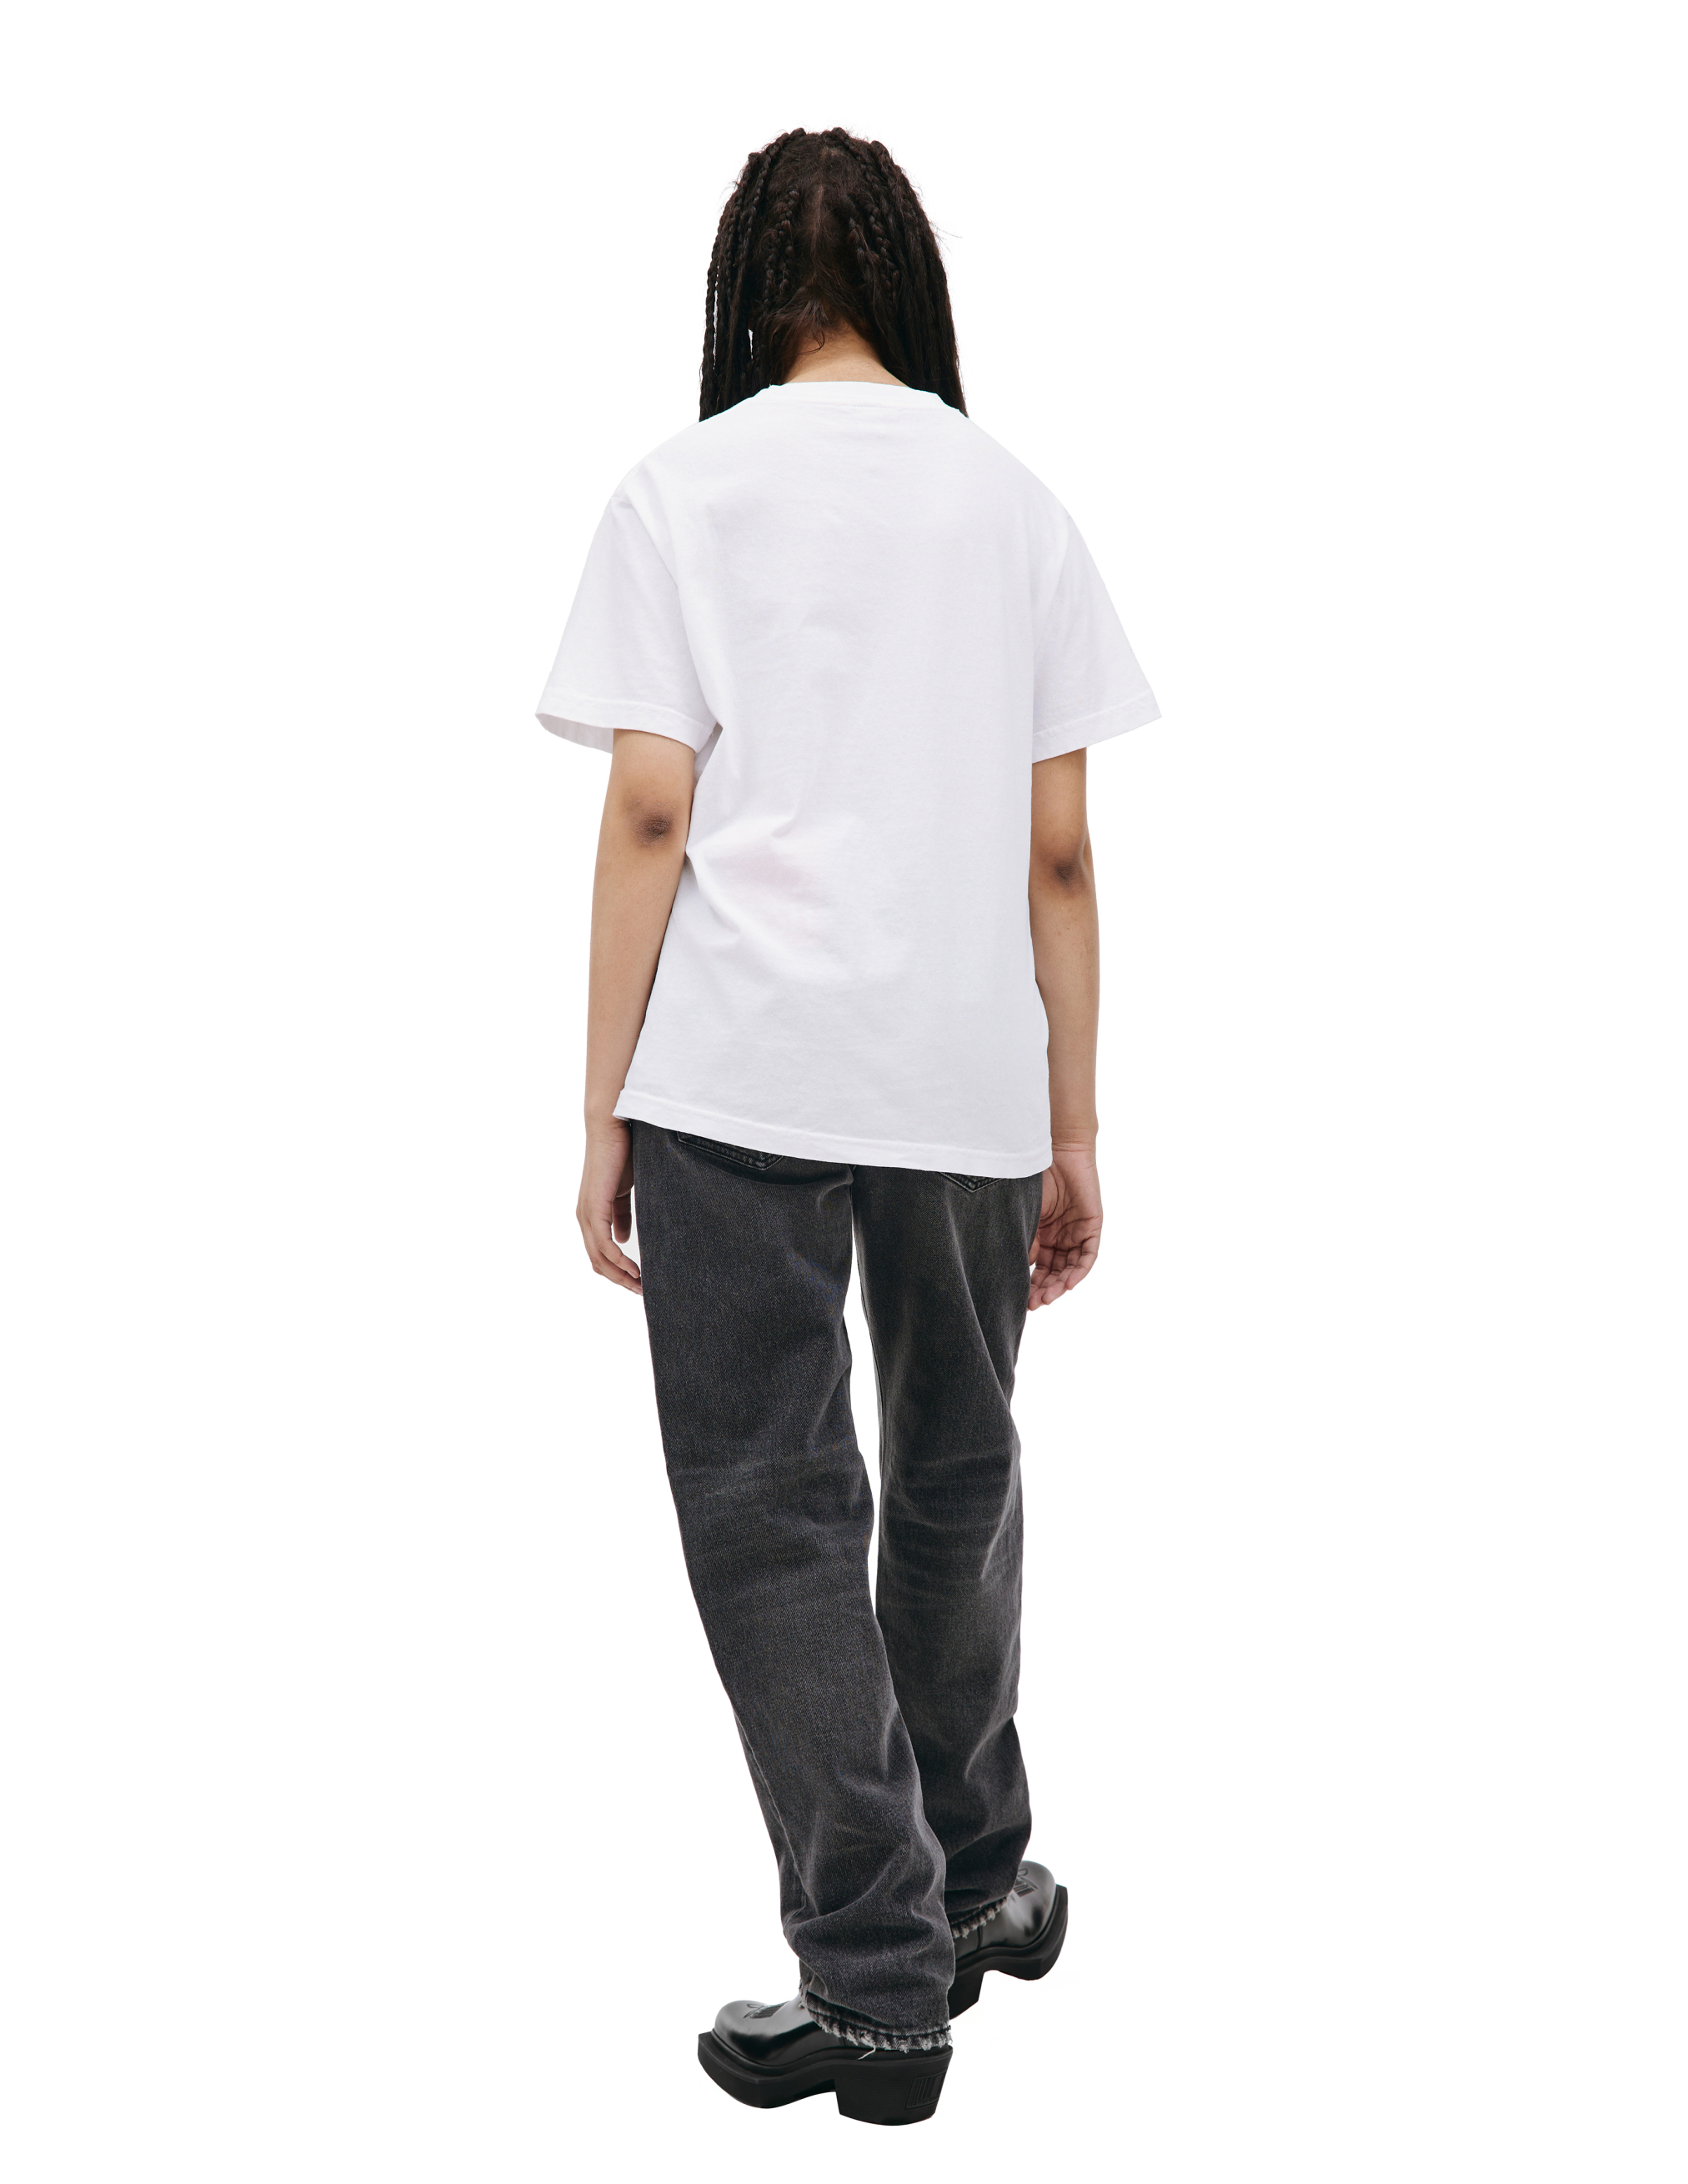 Белая футболка NY Health Club SPORTY & RICH TS836WH, размер S;M;L;XL - фото 3